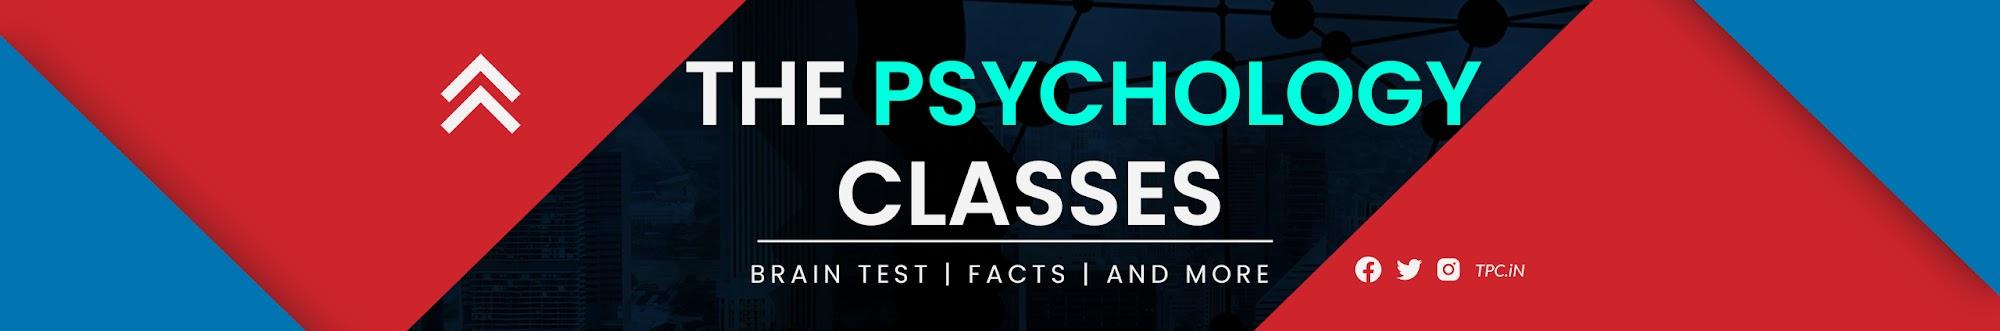 The Psychology Classes